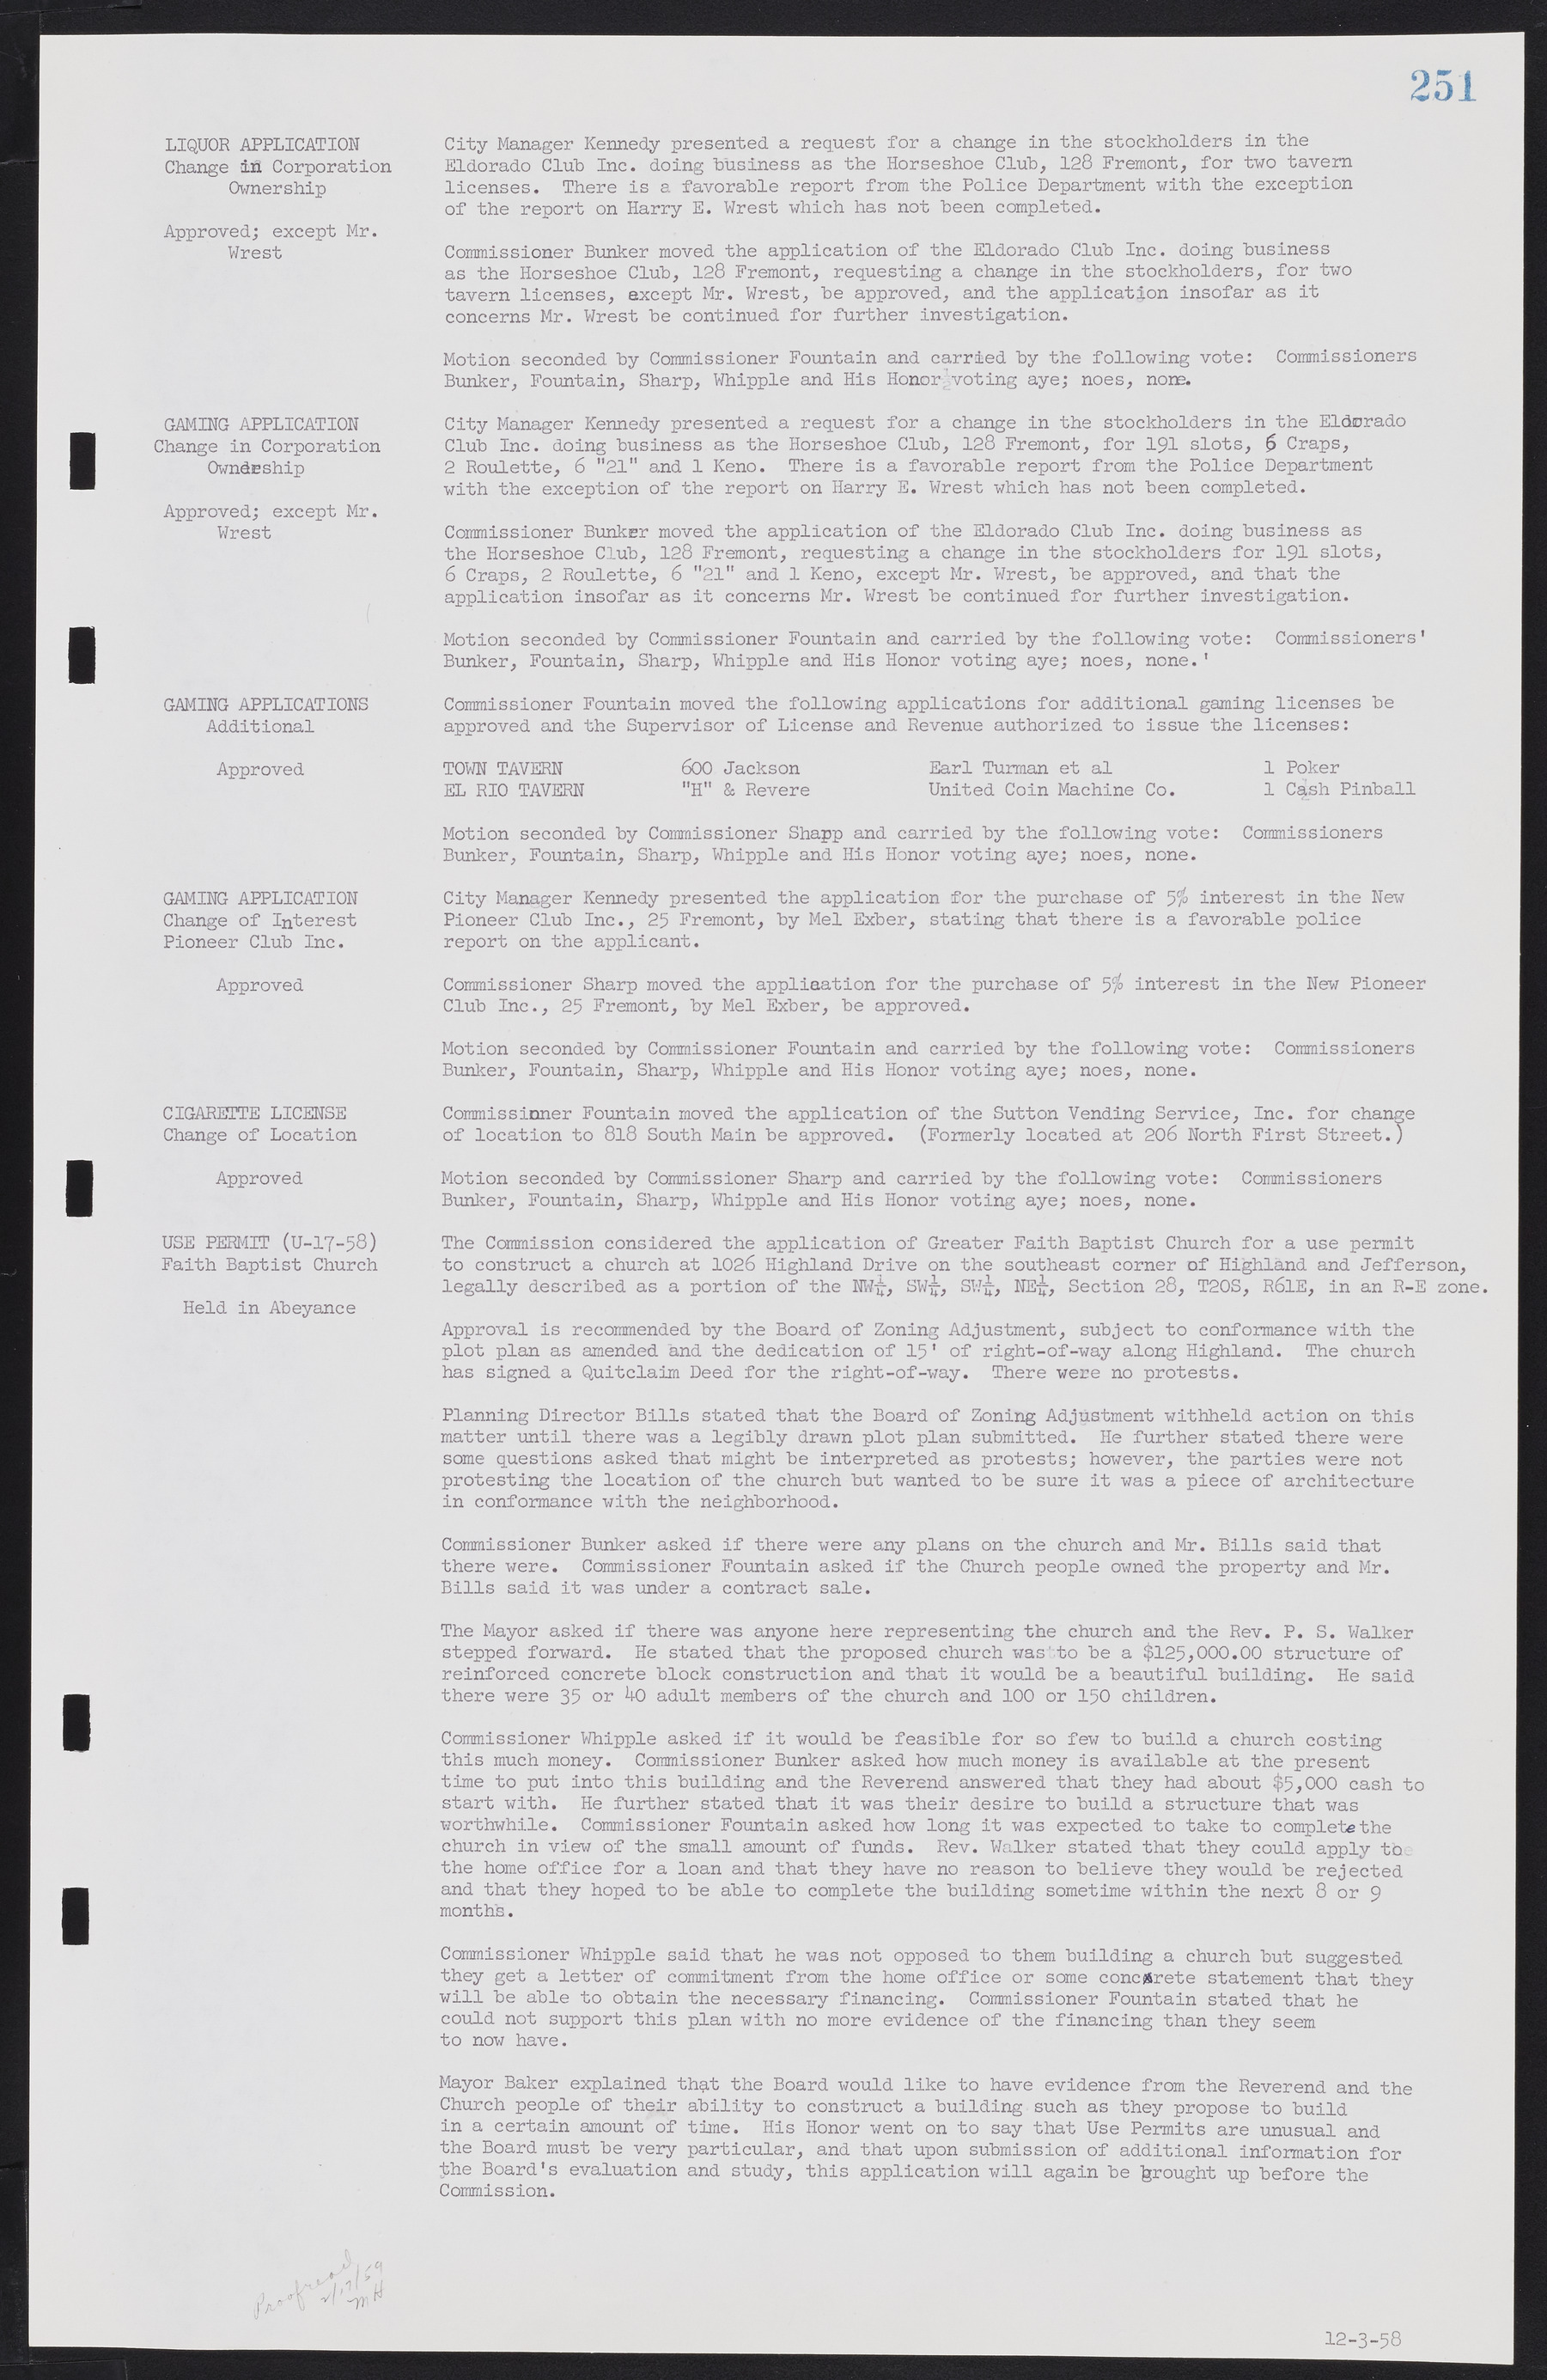 Las Vegas City Commission Minutes, November 20, 1957 to December 2, 1959, lvc000011-259